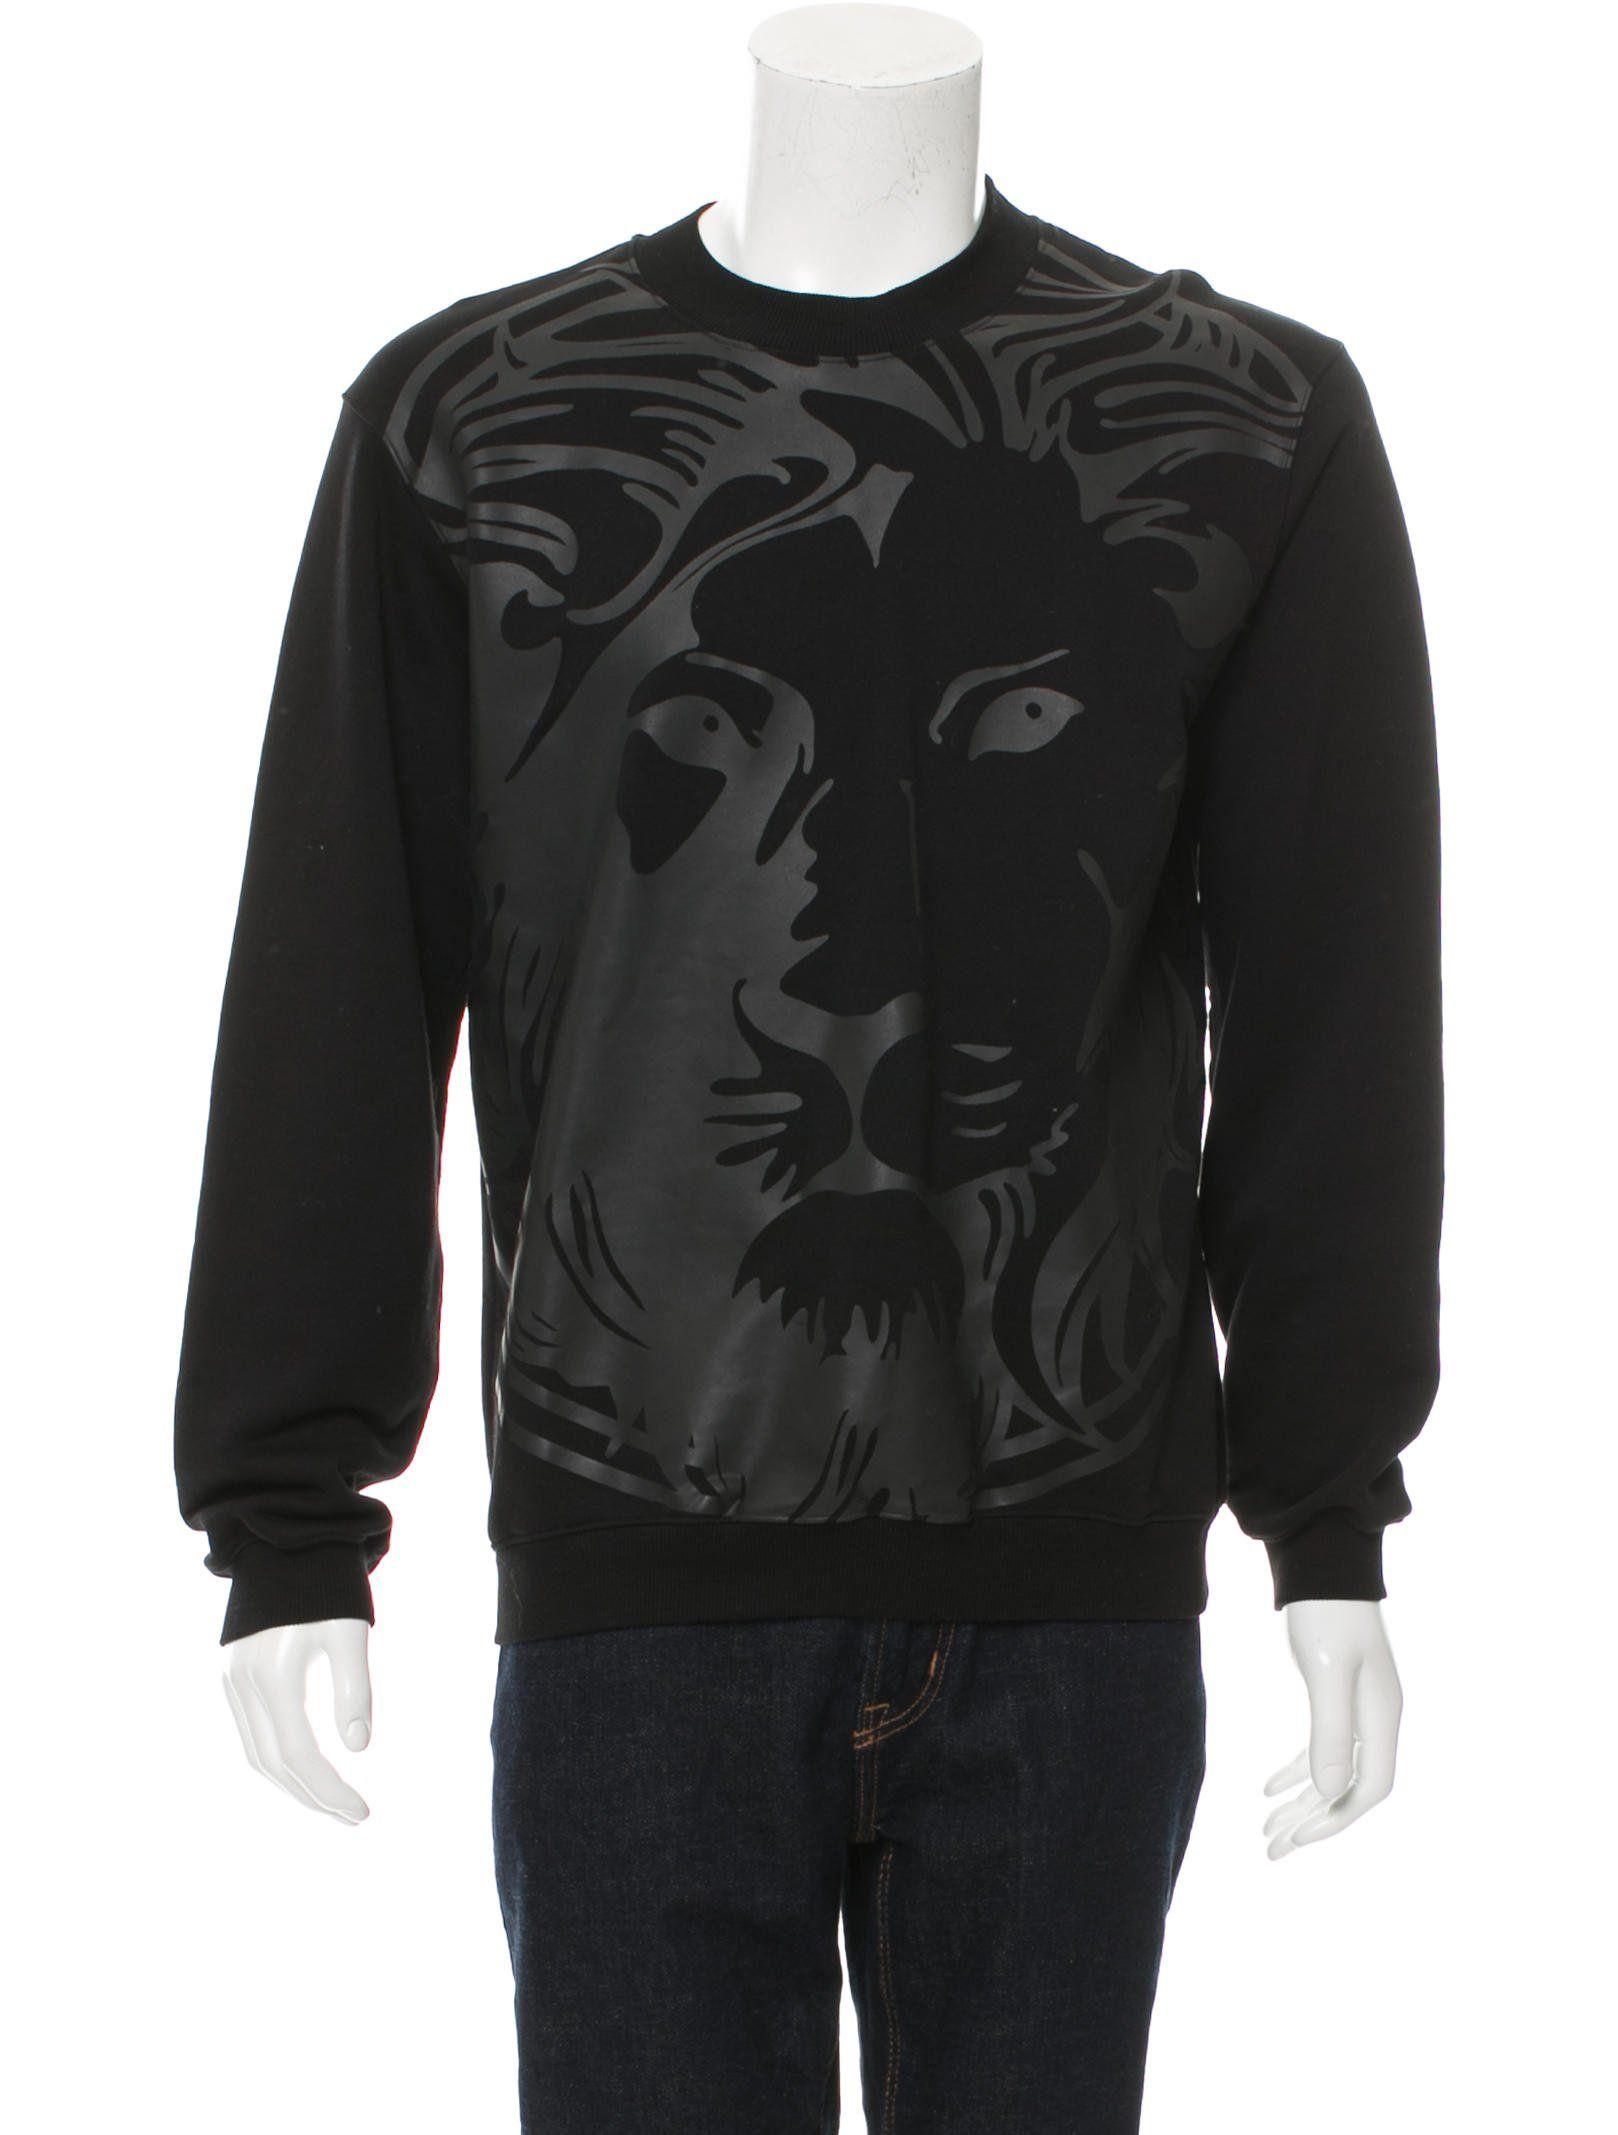 Clothing with Lion Logo - Versus Lion Logo Crew Neck Sweatshirt - Clothing - WVE20577 | The ...